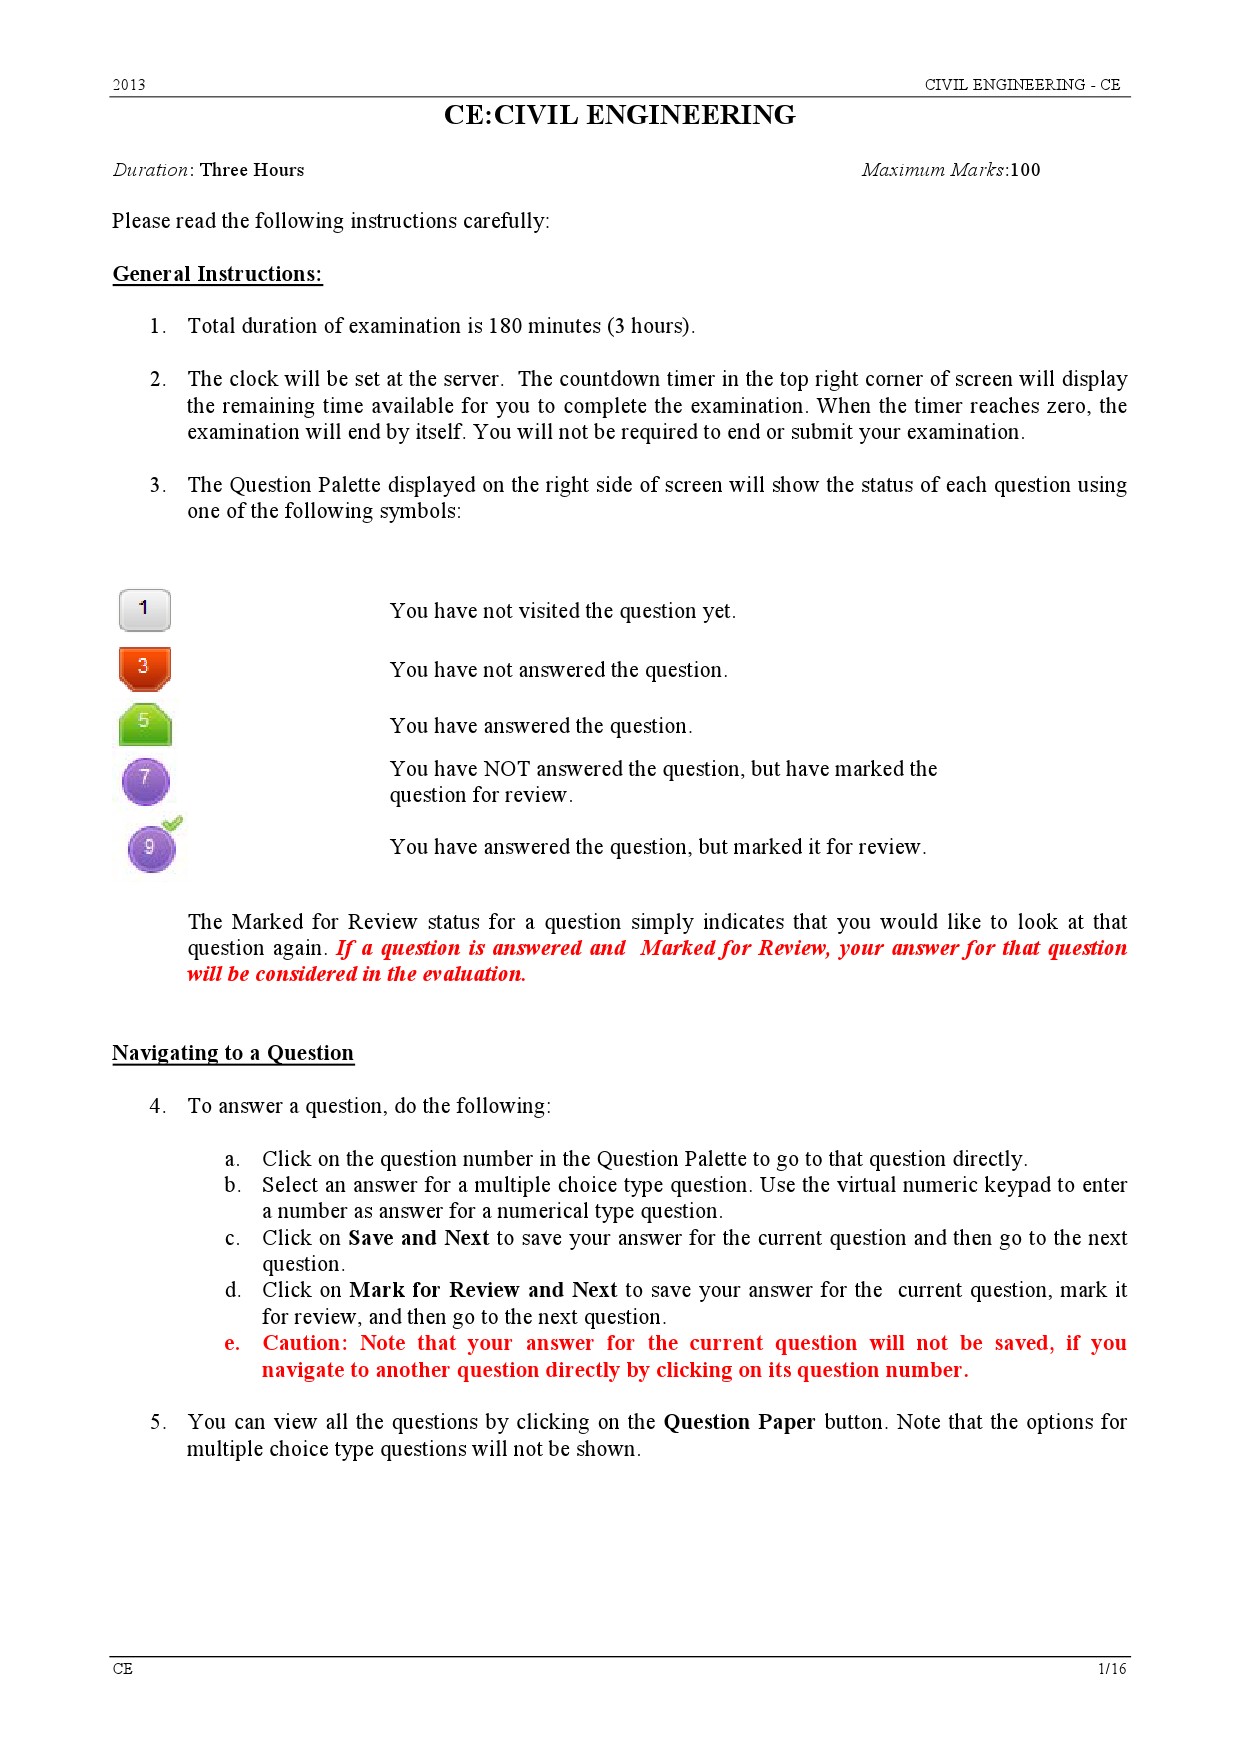 GATE Exam Question Paper 2013 Civil Engineering 1